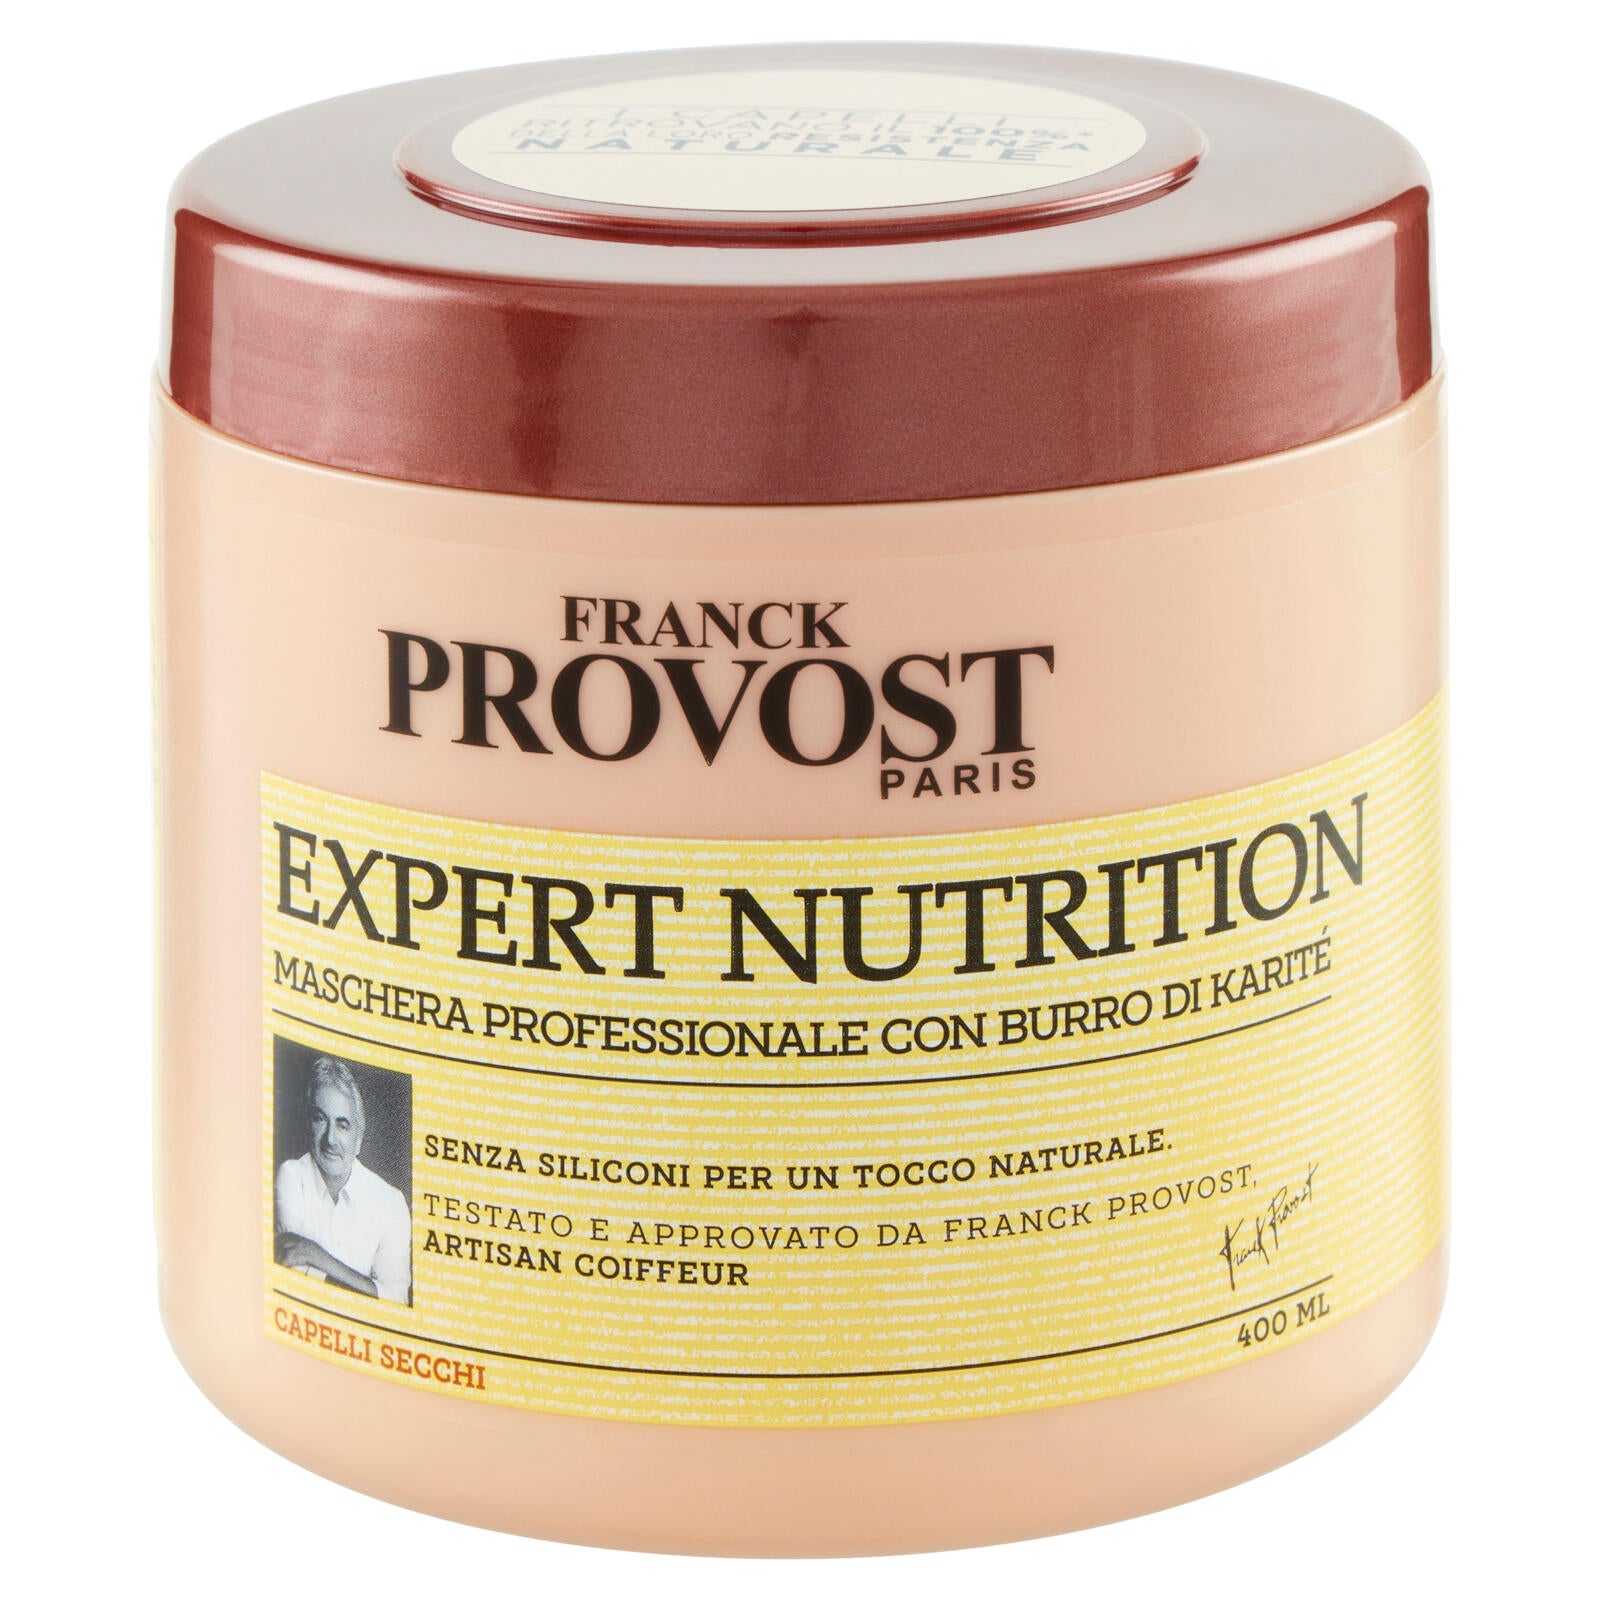 Franck Provost Maschera Professionale Expert Nutrition per capelli nutriti, 400 ml